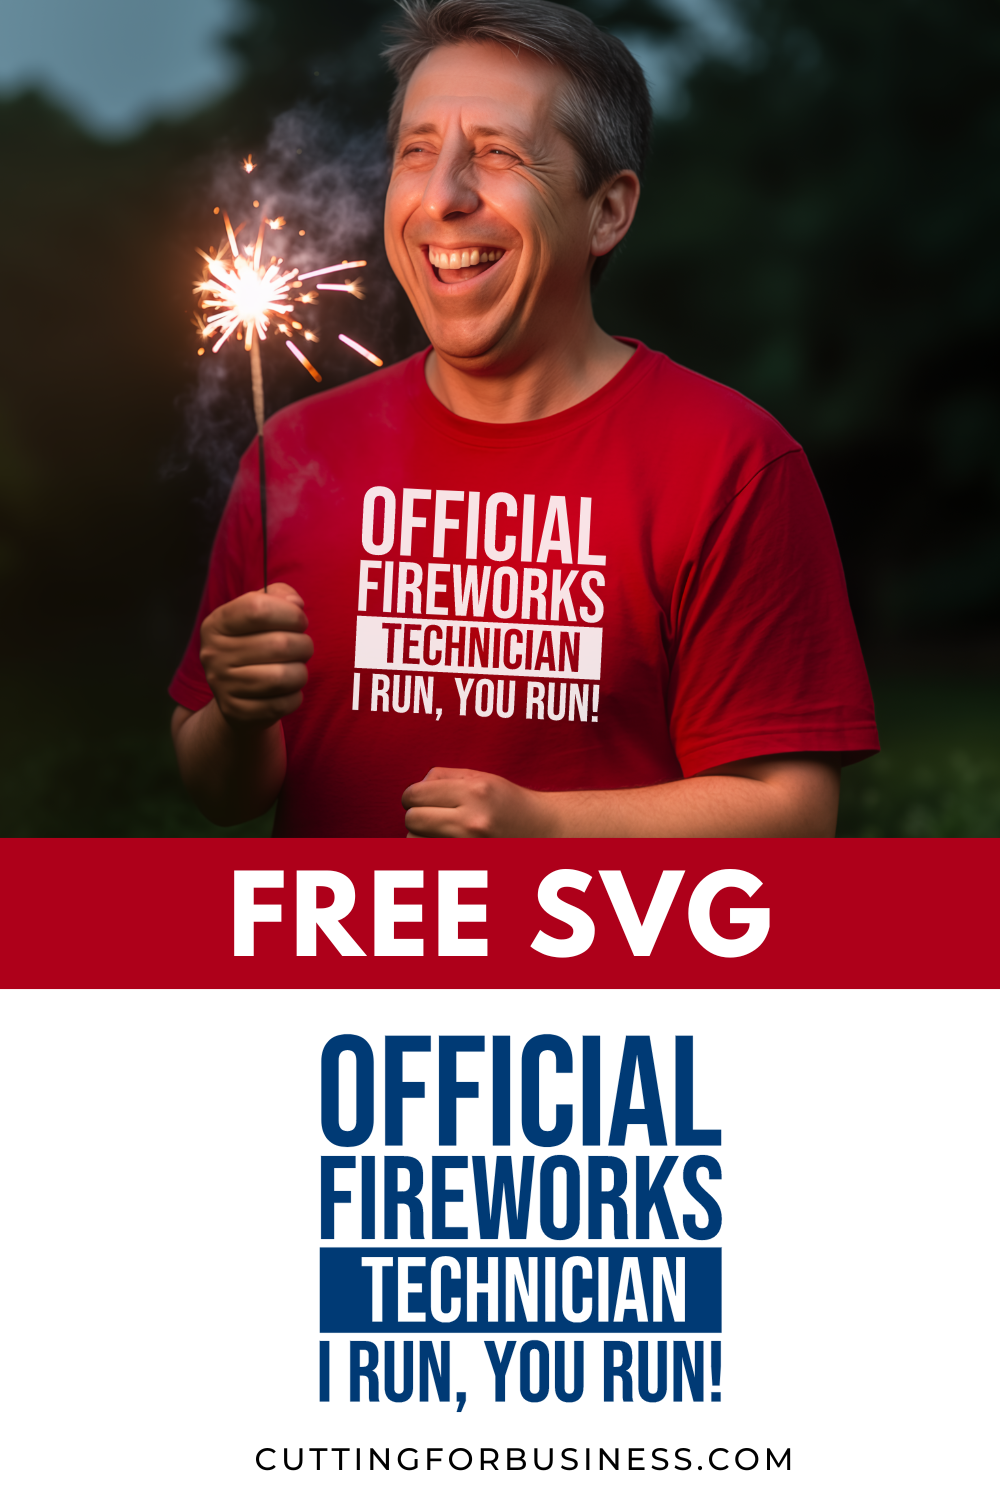 Free July 4th SVG - Fireworks Technician - cuttingforbusiness.com